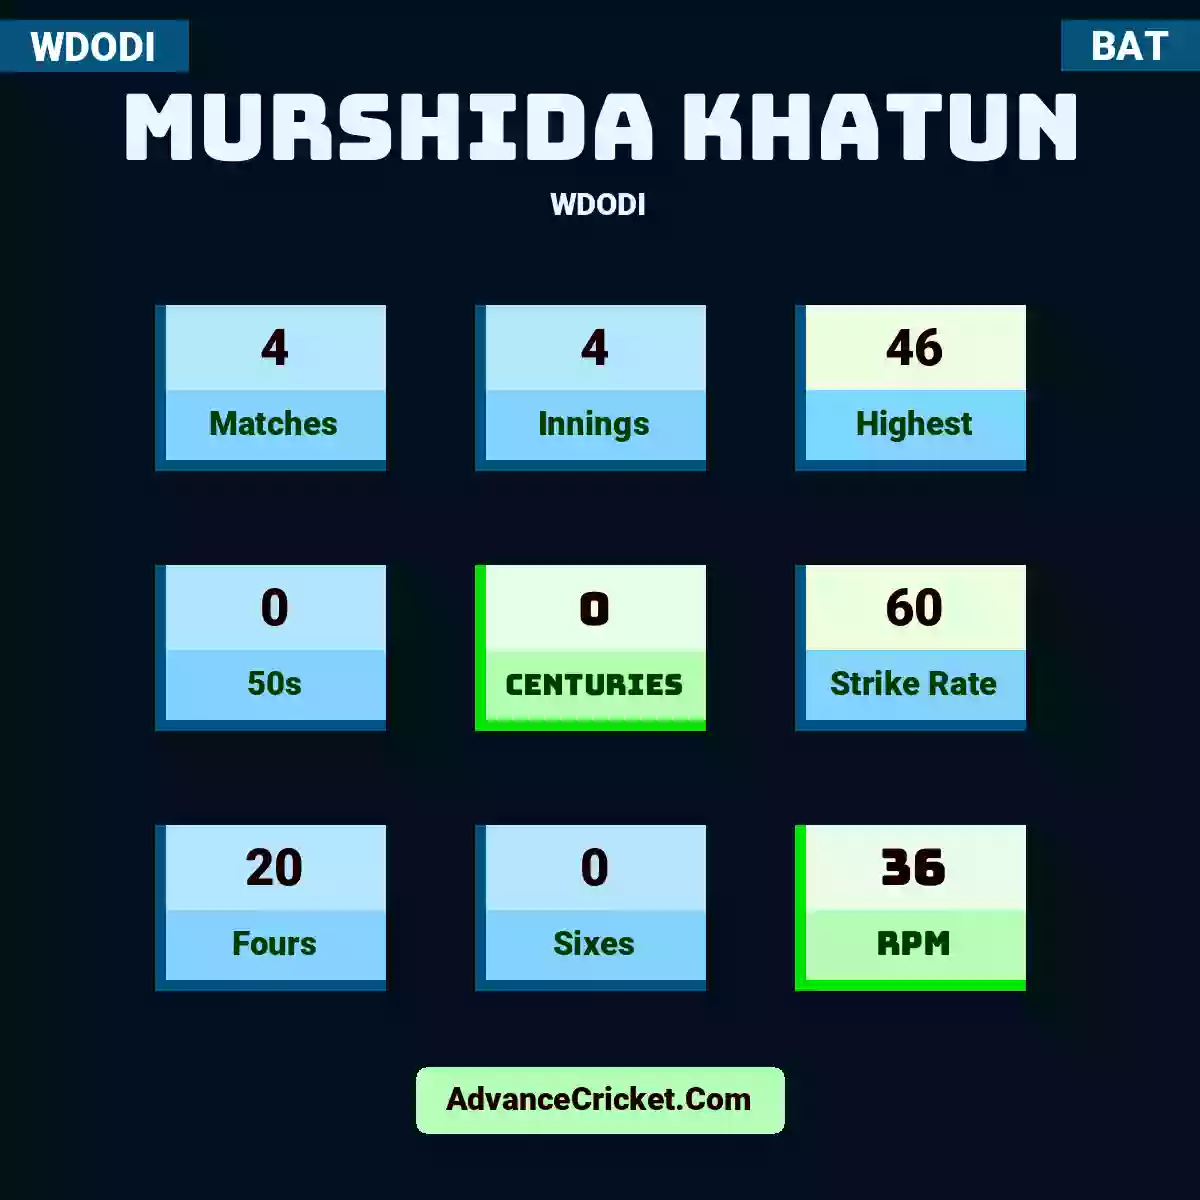 Murshida Khatun WDODI , Murshida Khatun played 4 matches, scored 46 runs as highest, 0 half-centuries, and 0 centuries, with a strike rate of 60. M.Khatun hit 20 fours and 0 sixes, with an RPM of 36.